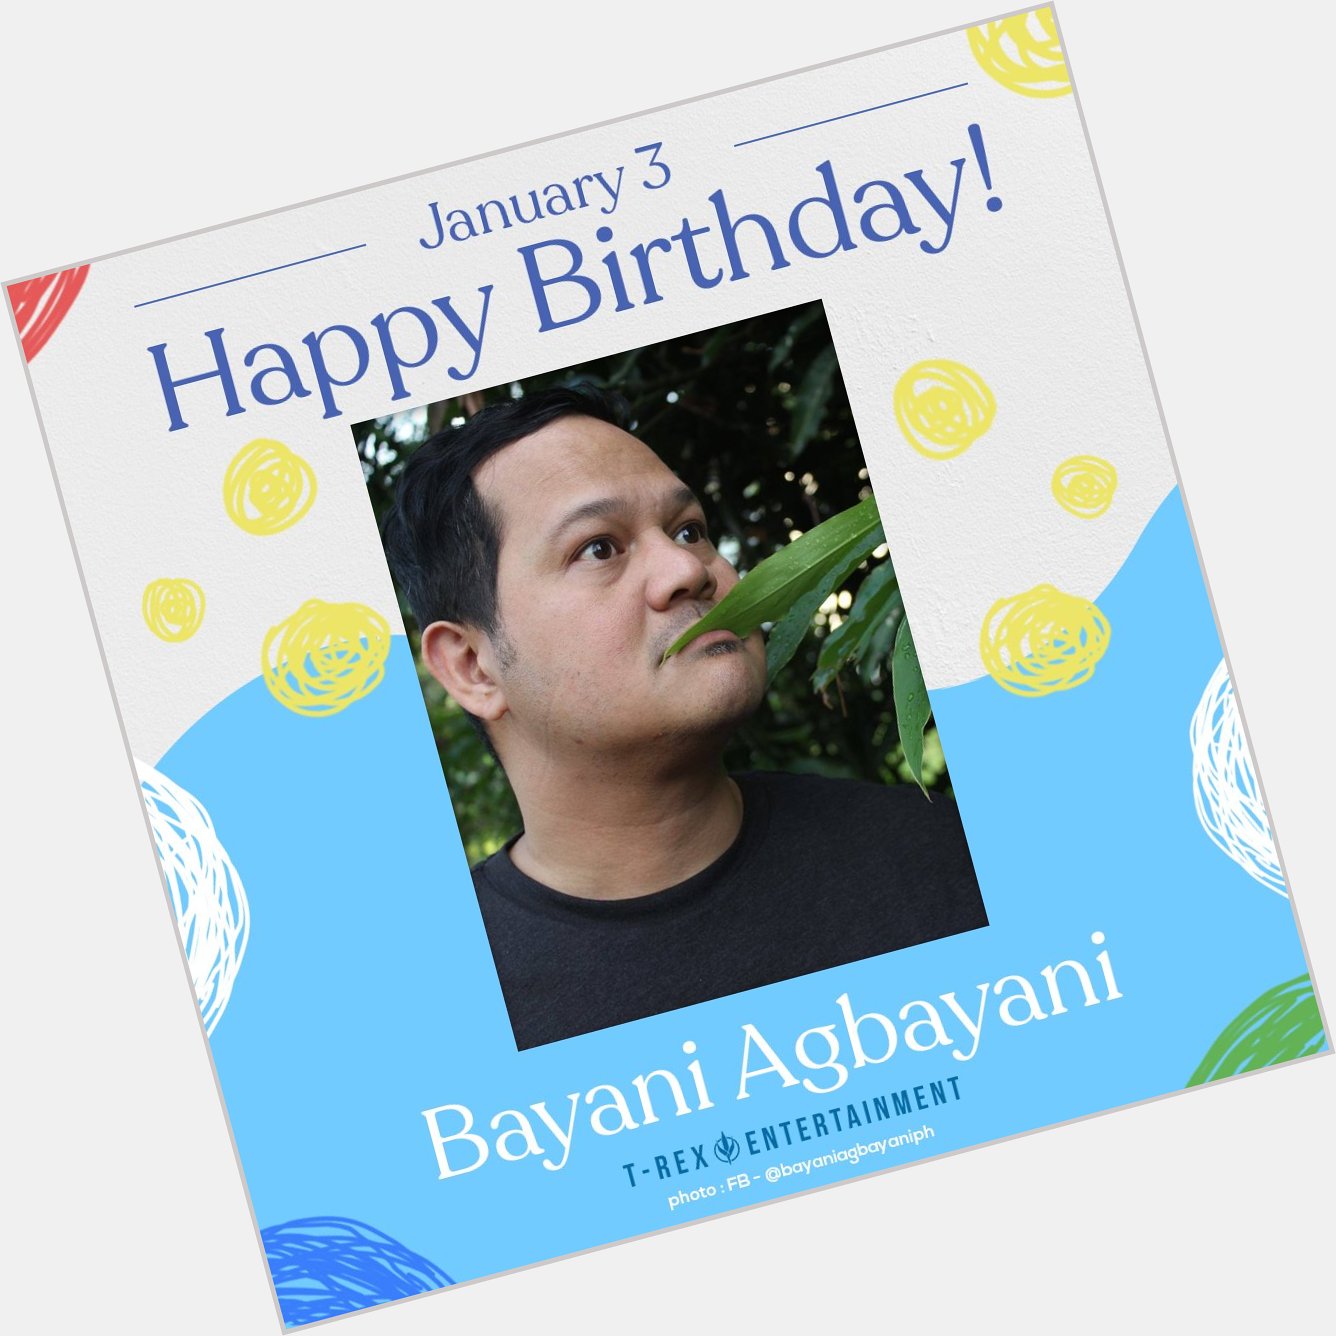 Happy birthday to you, Bayani Agbayani!
Enjoy your special day! 